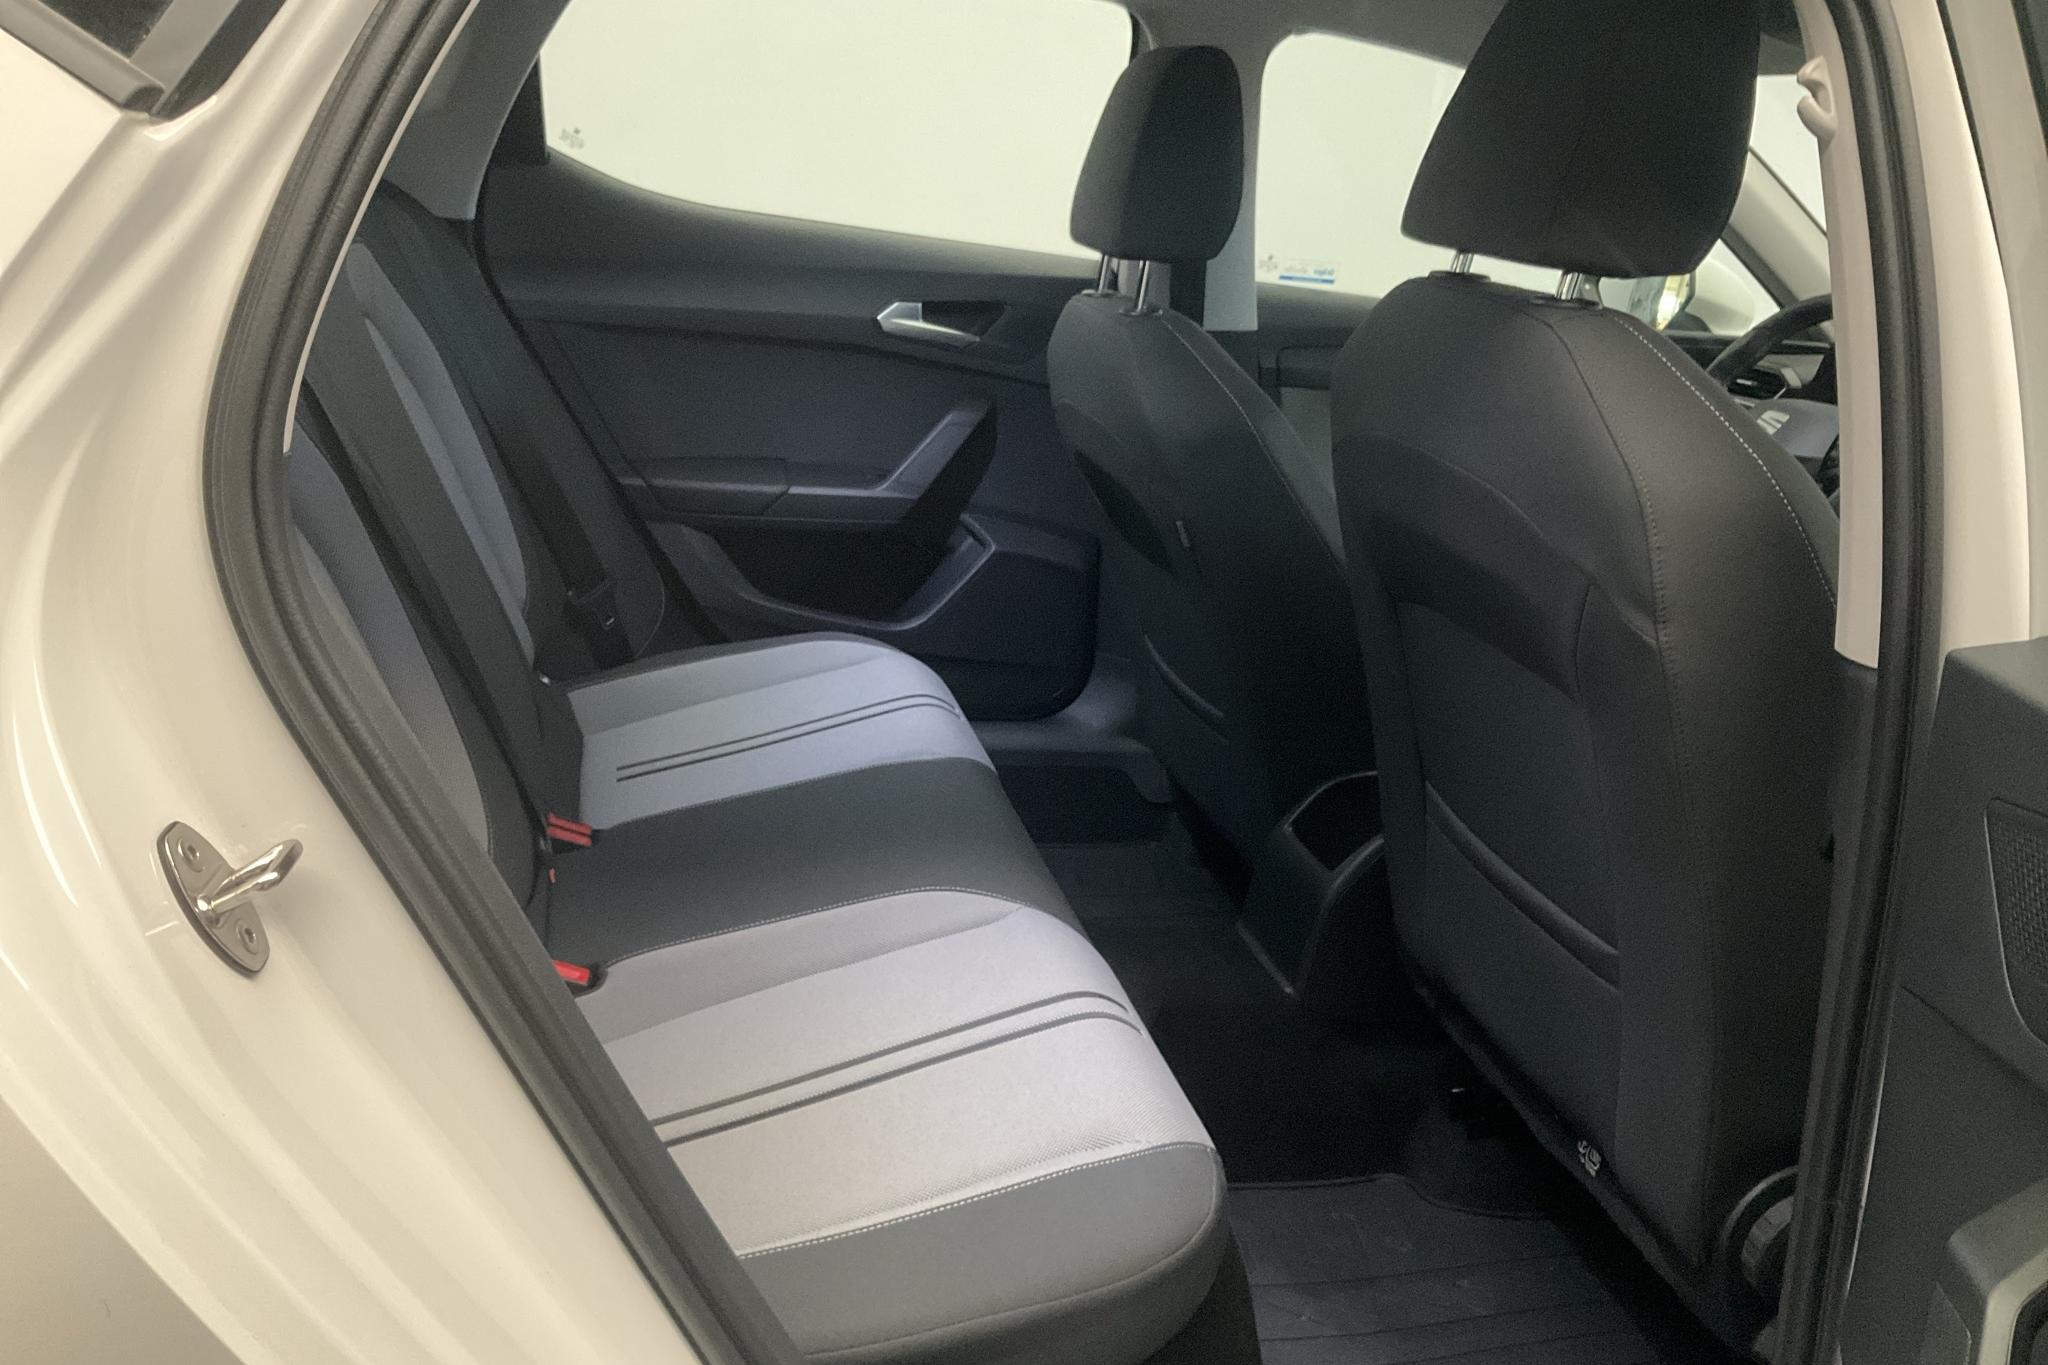 Seat Leon 2.0 TDI 5dr (150hk) - 15 390 km - Automatic - white - 2021